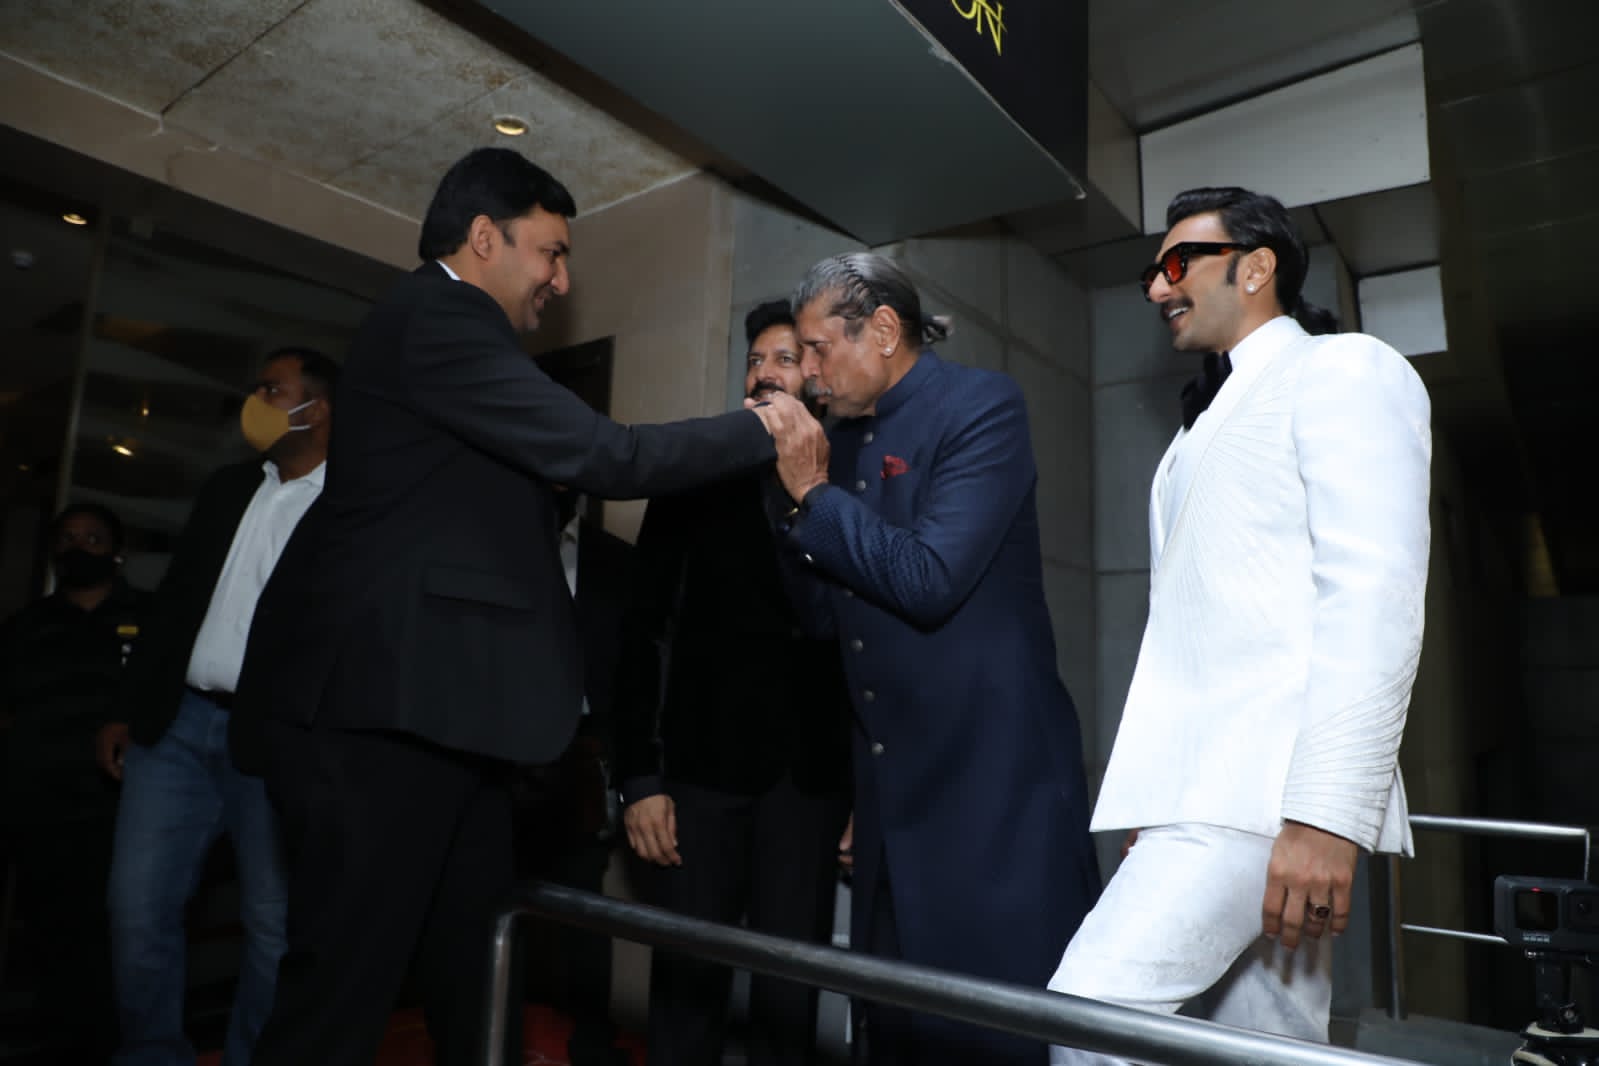 83 movie mumbai premiere photos goes viral in social media 